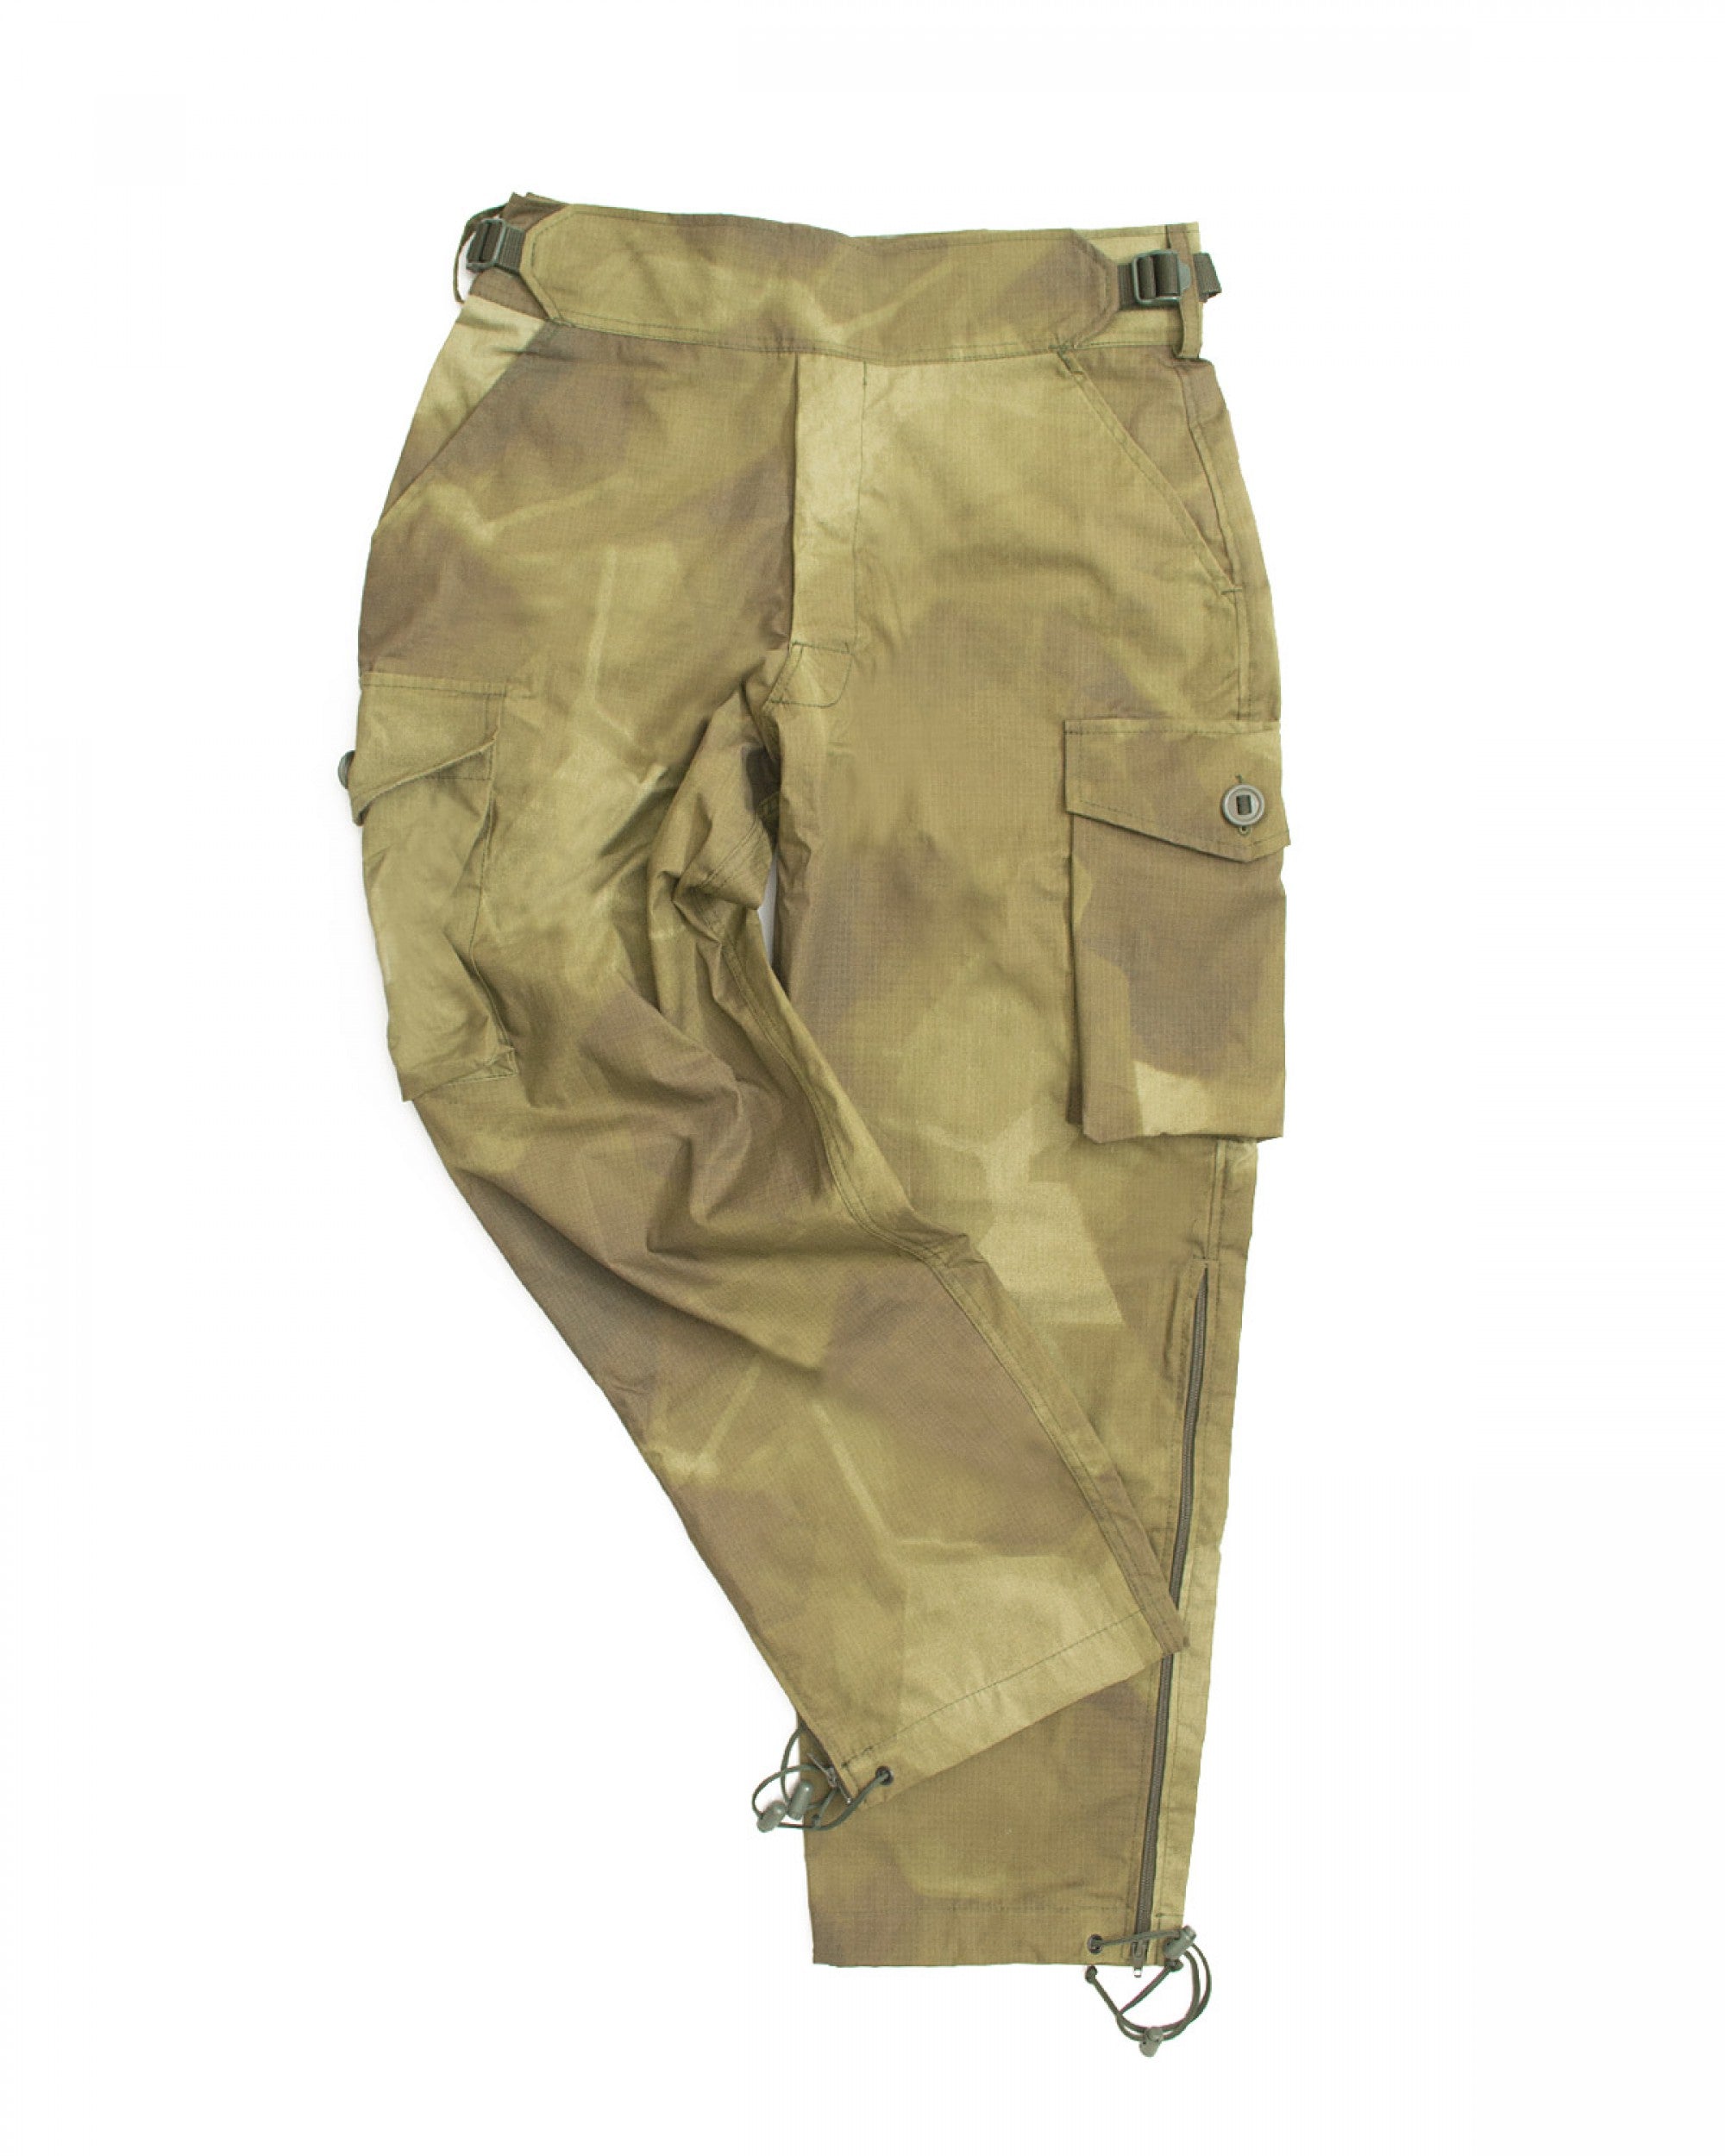 US BDU Woodland Camouflage Combat Trousers - Epic Militaria